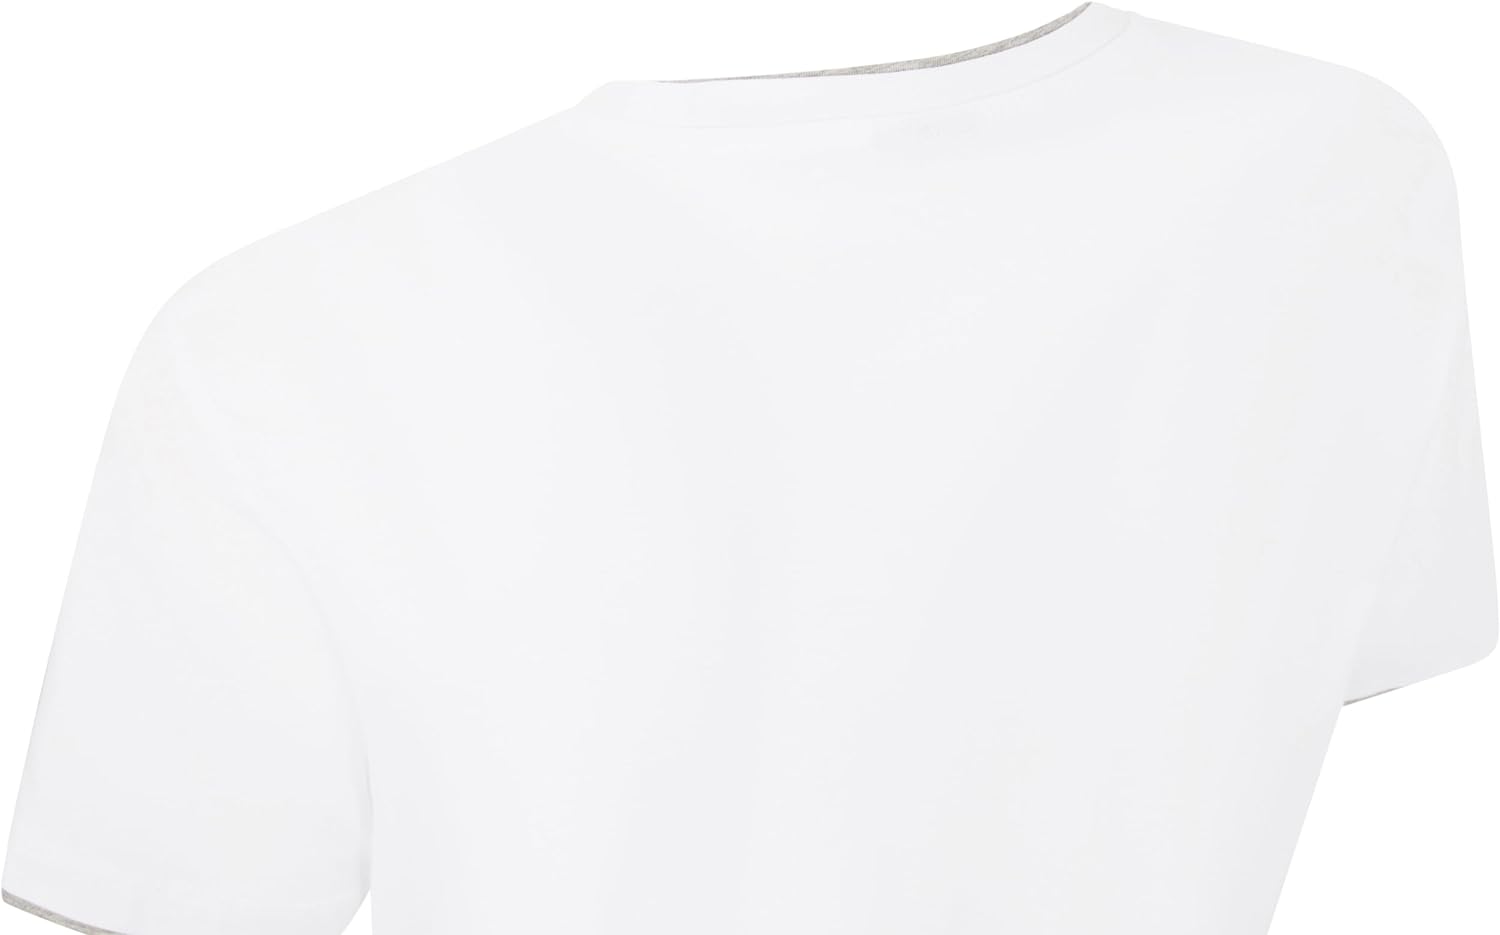 GEOX T-shirt Uomo - Bianco